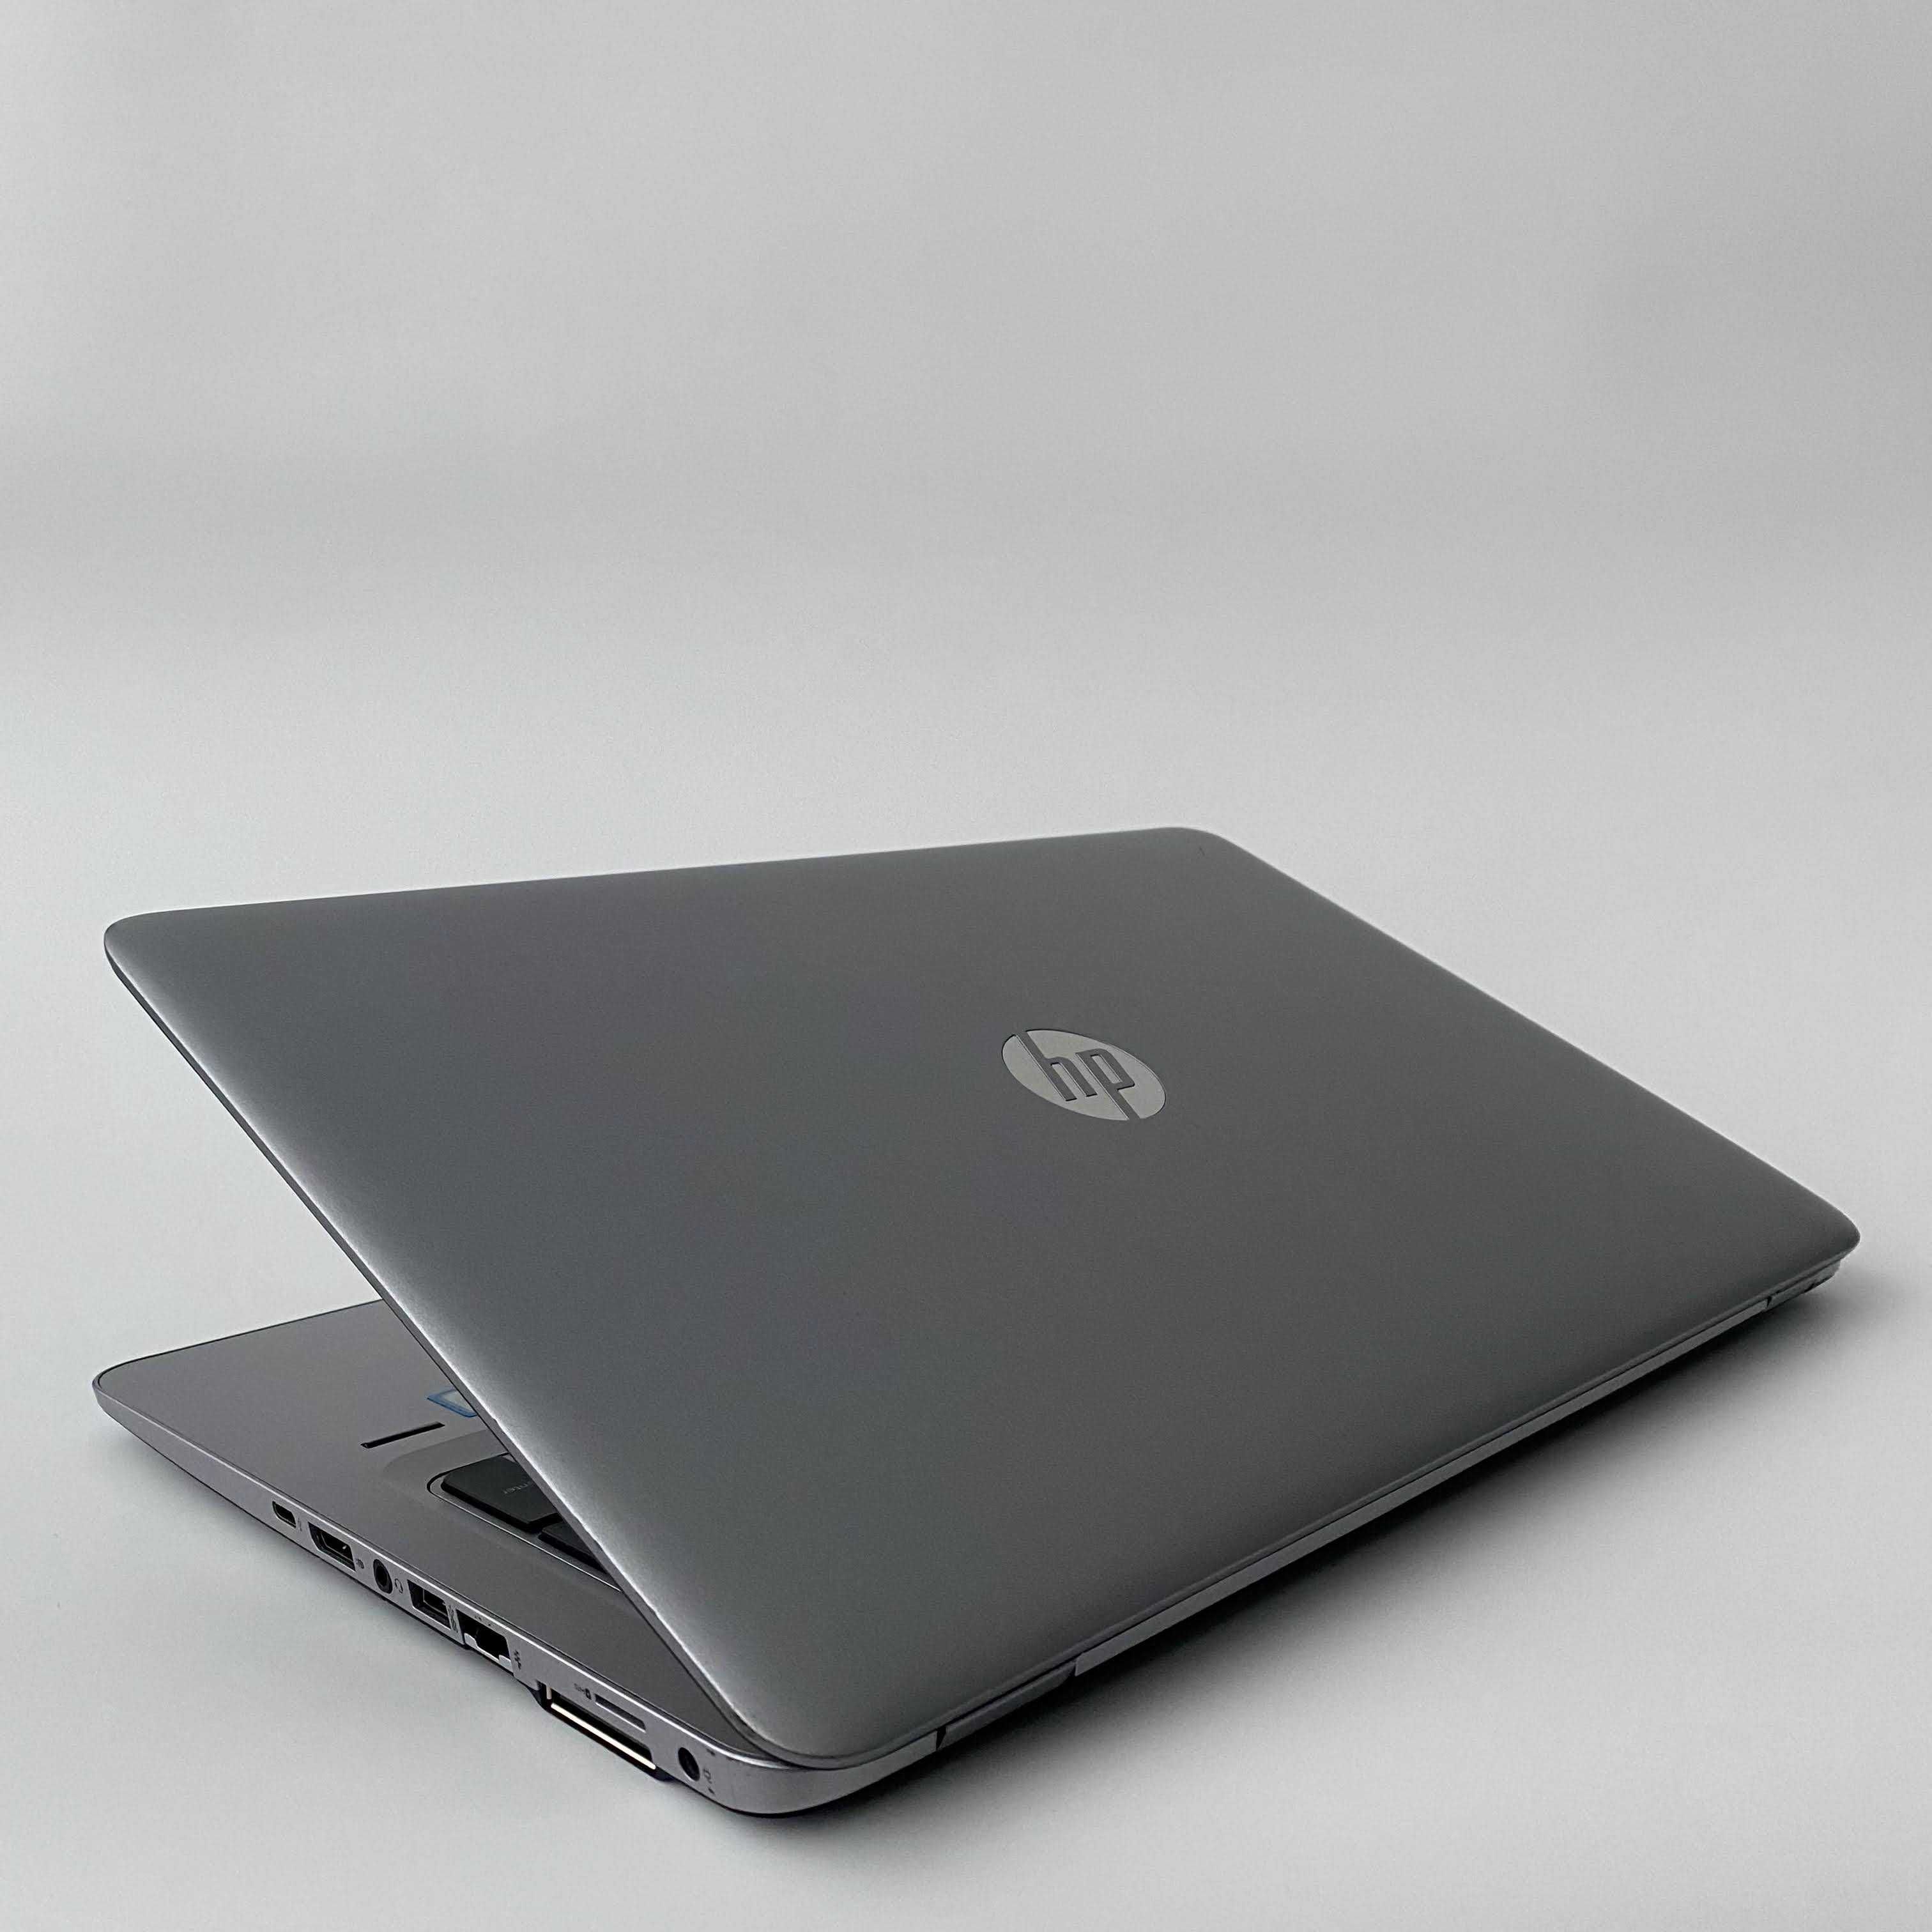 Ноутбук HP EliteBook 850 G3 FullHD i7-6600U/16GB RAM/256GB SSD